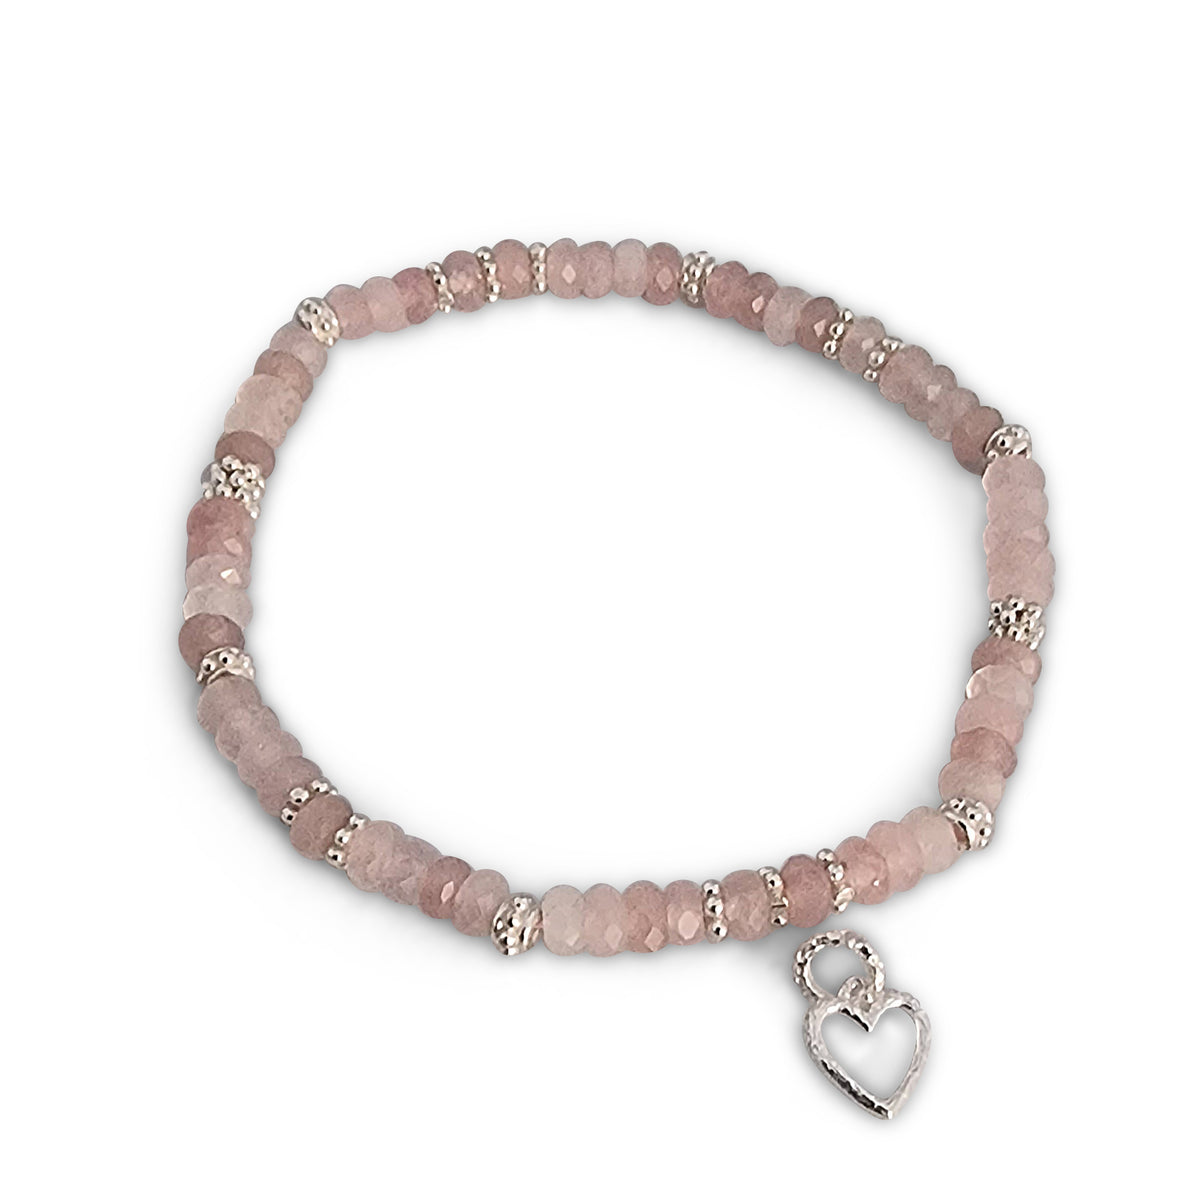 Bracelet rose quartz